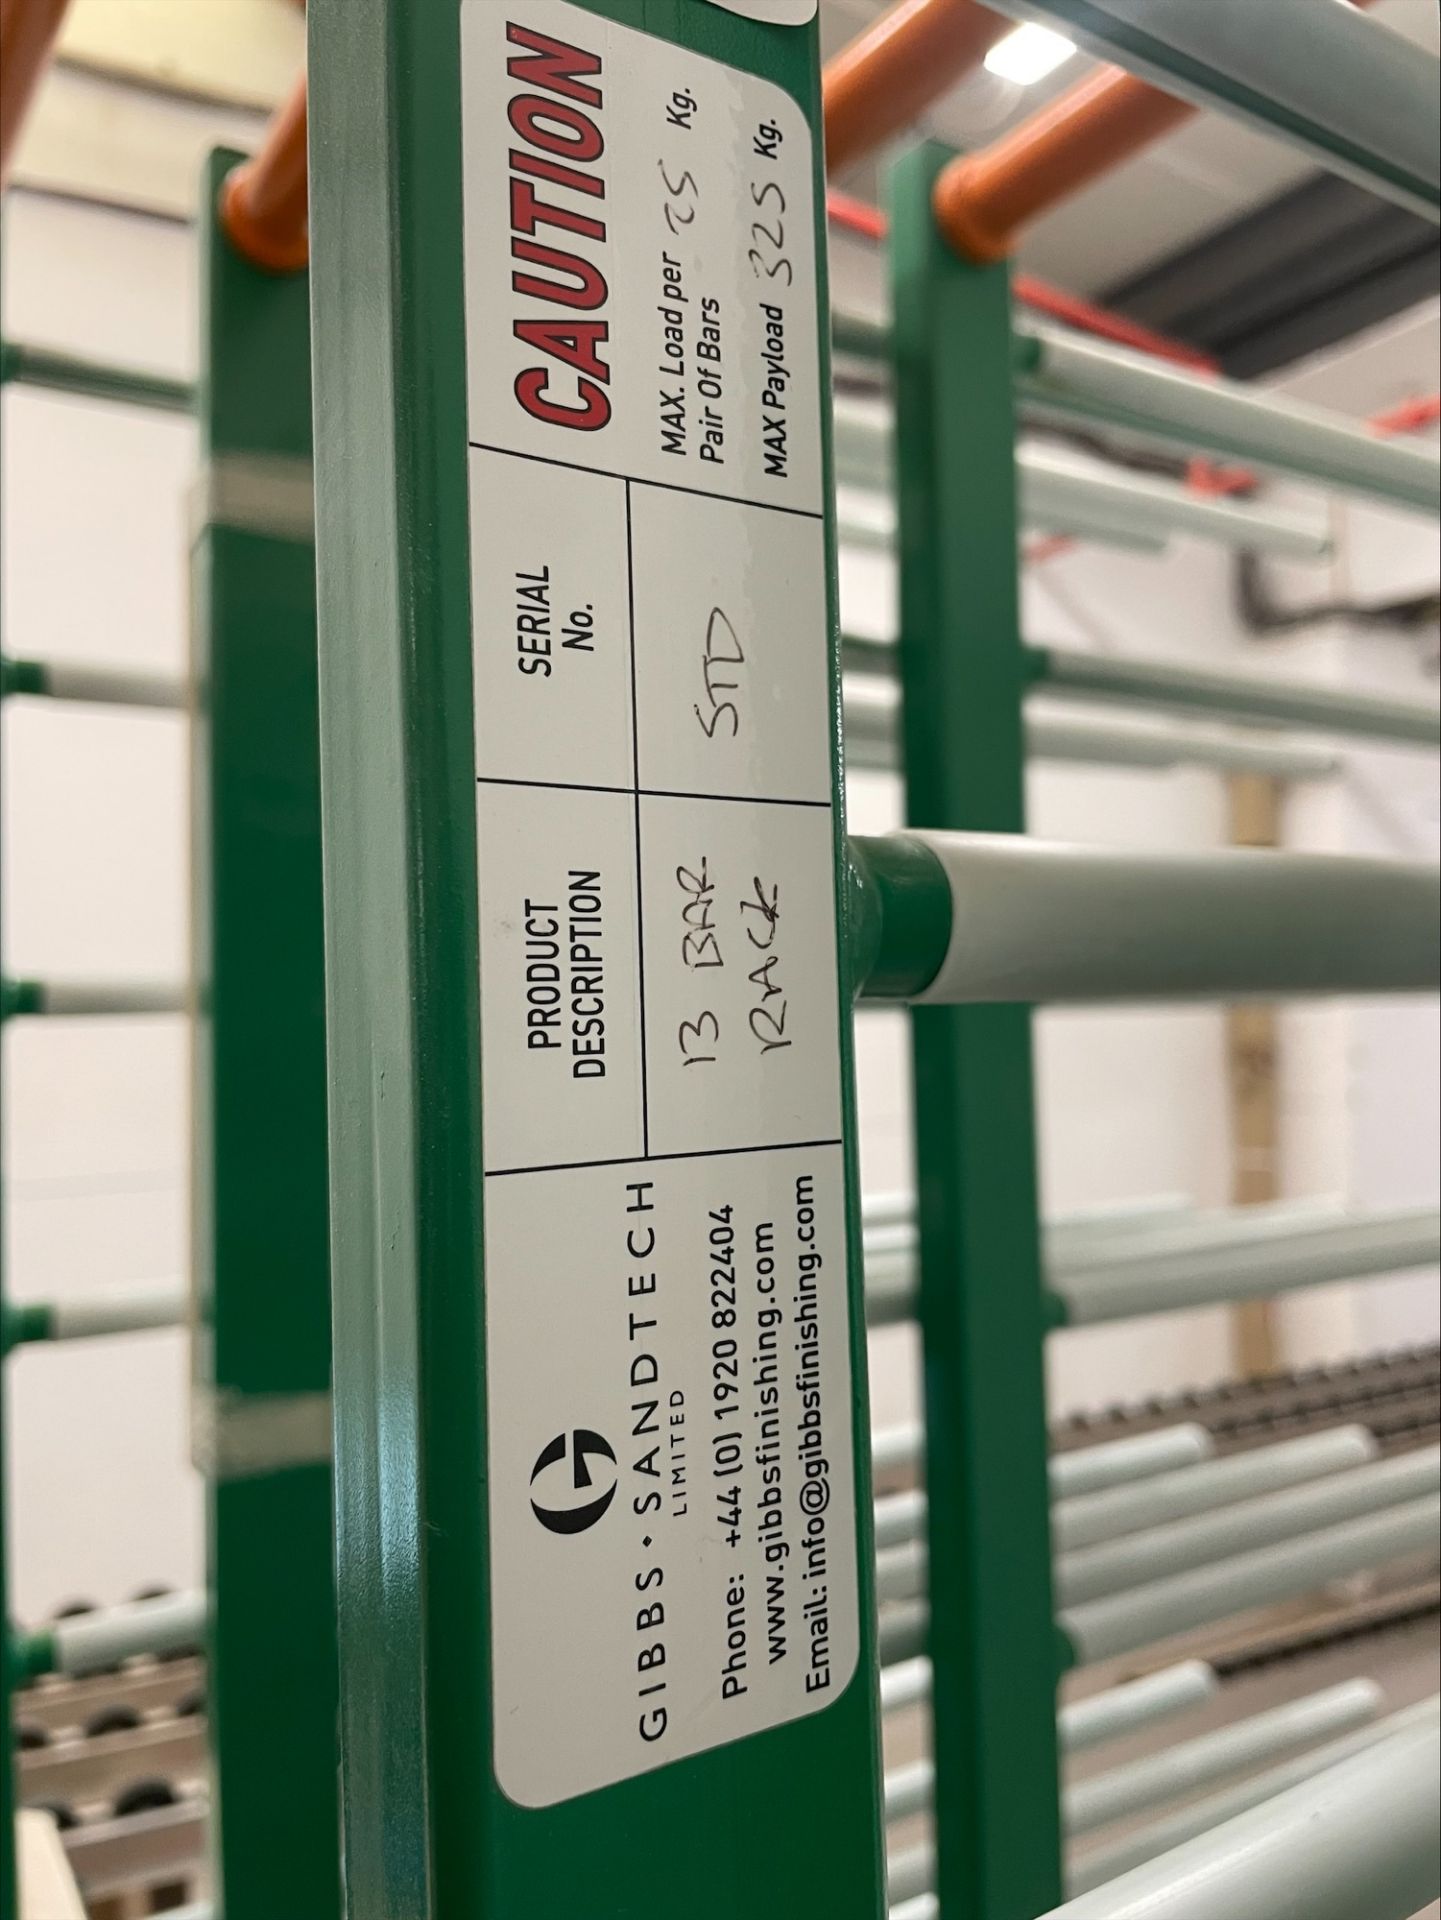 5x Gibbs Sandtech 13 bar standard spray drying racks, 13 bars per upright, max. load per pair of - Image 2 of 3